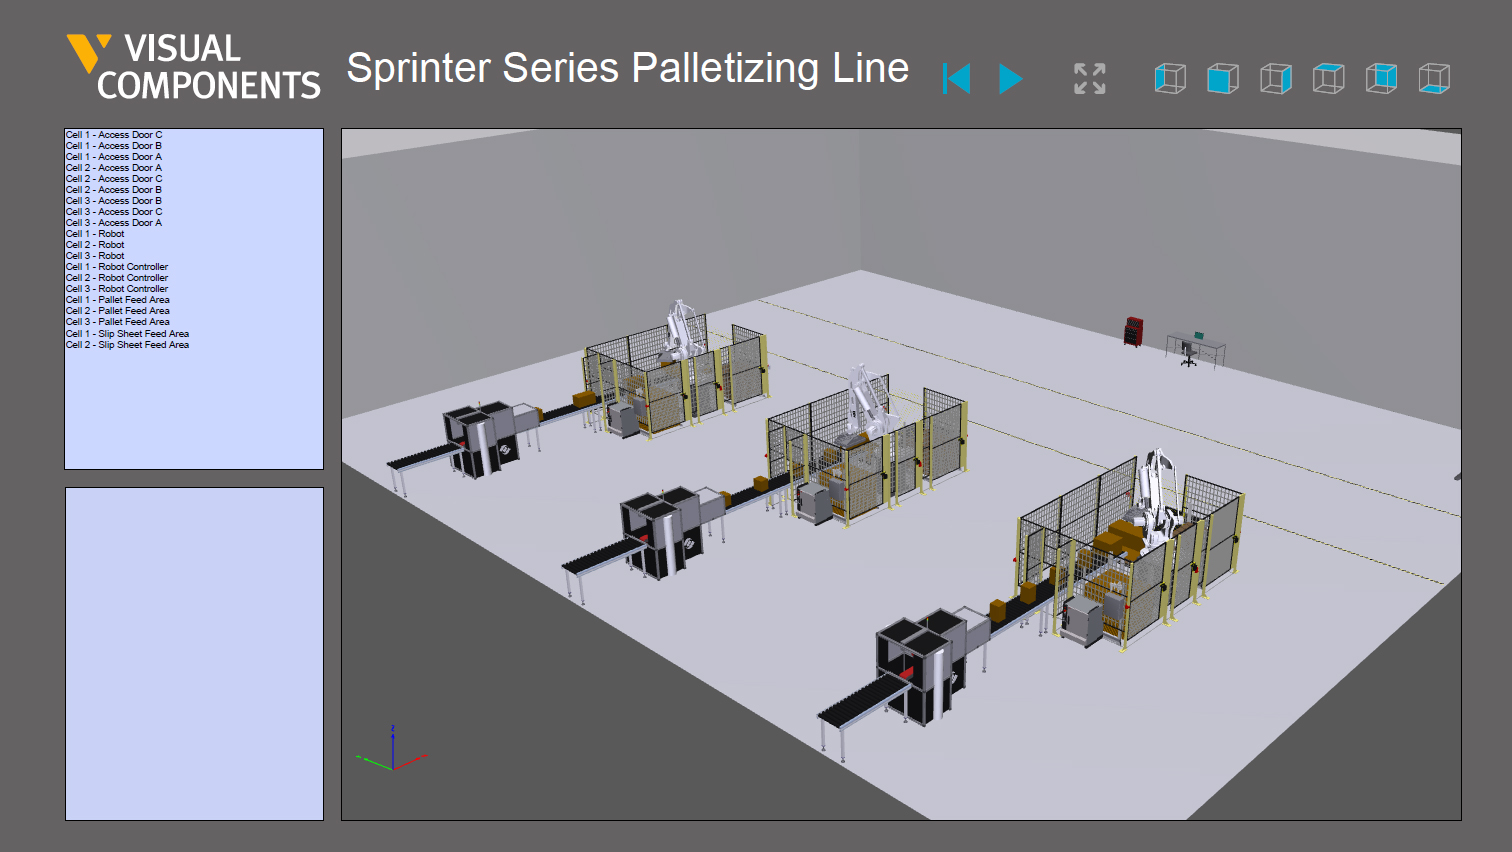 Simulation of a sprinter series palletizing line